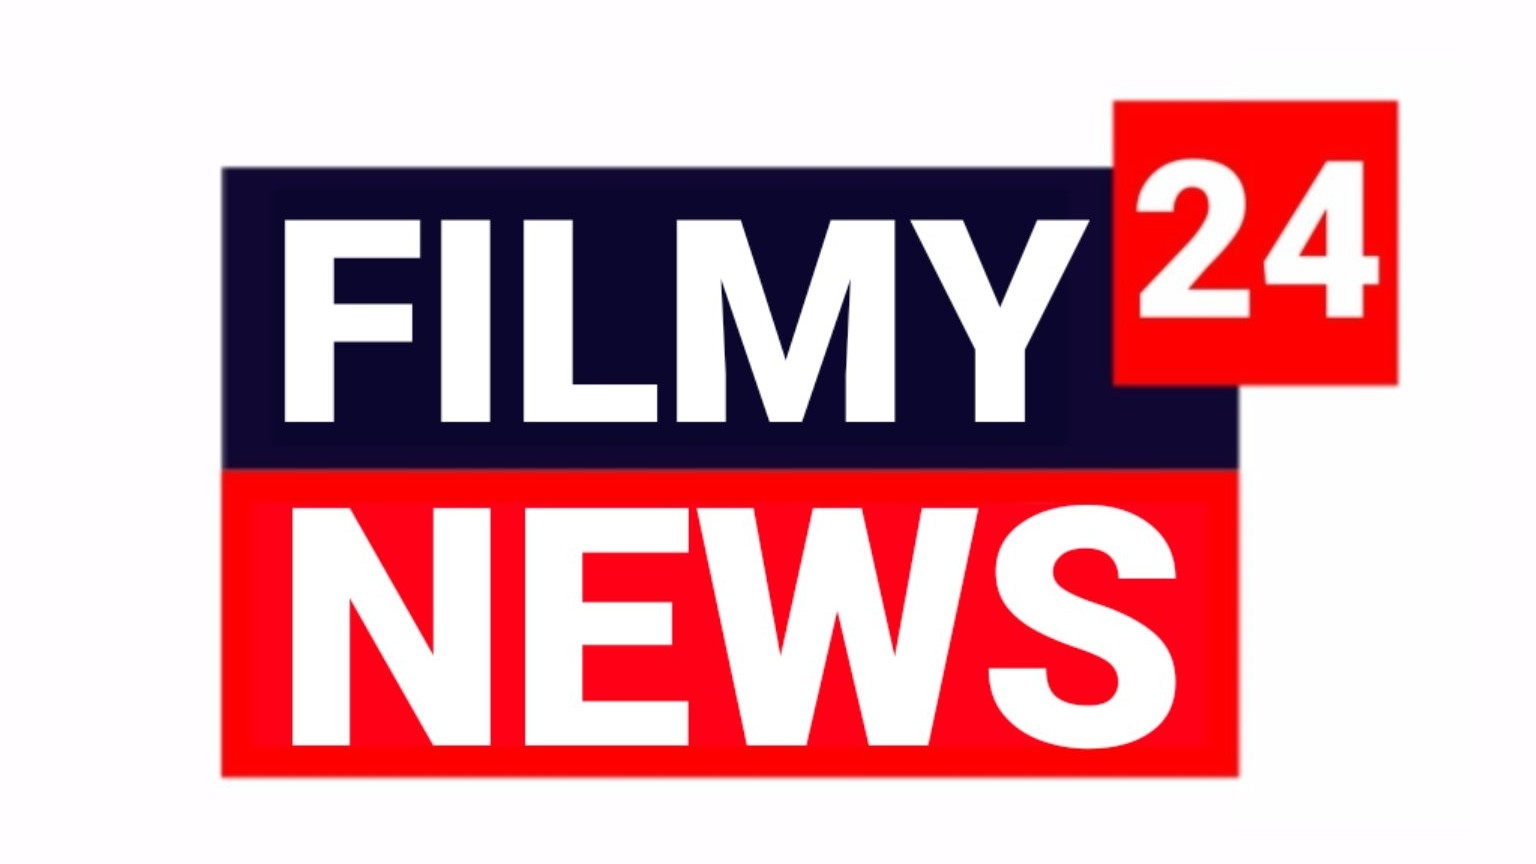 Filmy24News